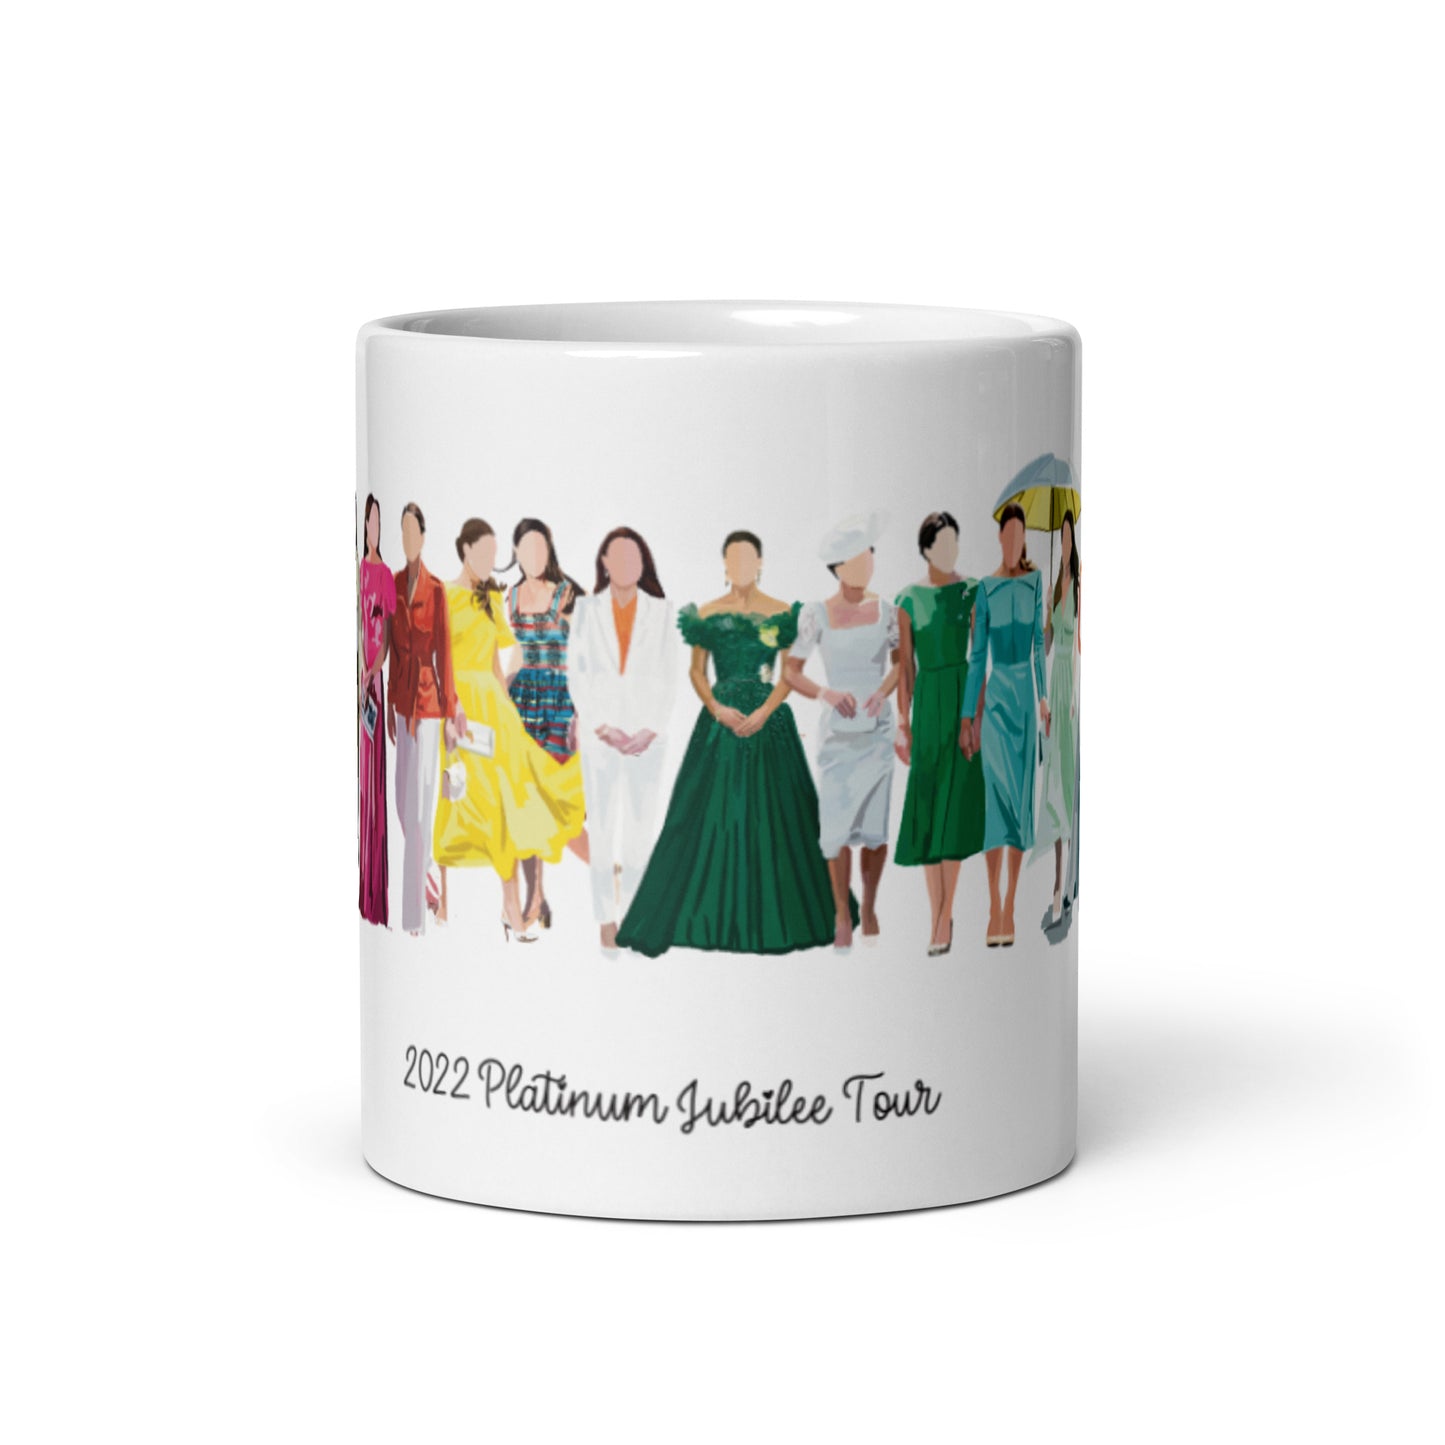 Kate jubilee tour White glossy mug